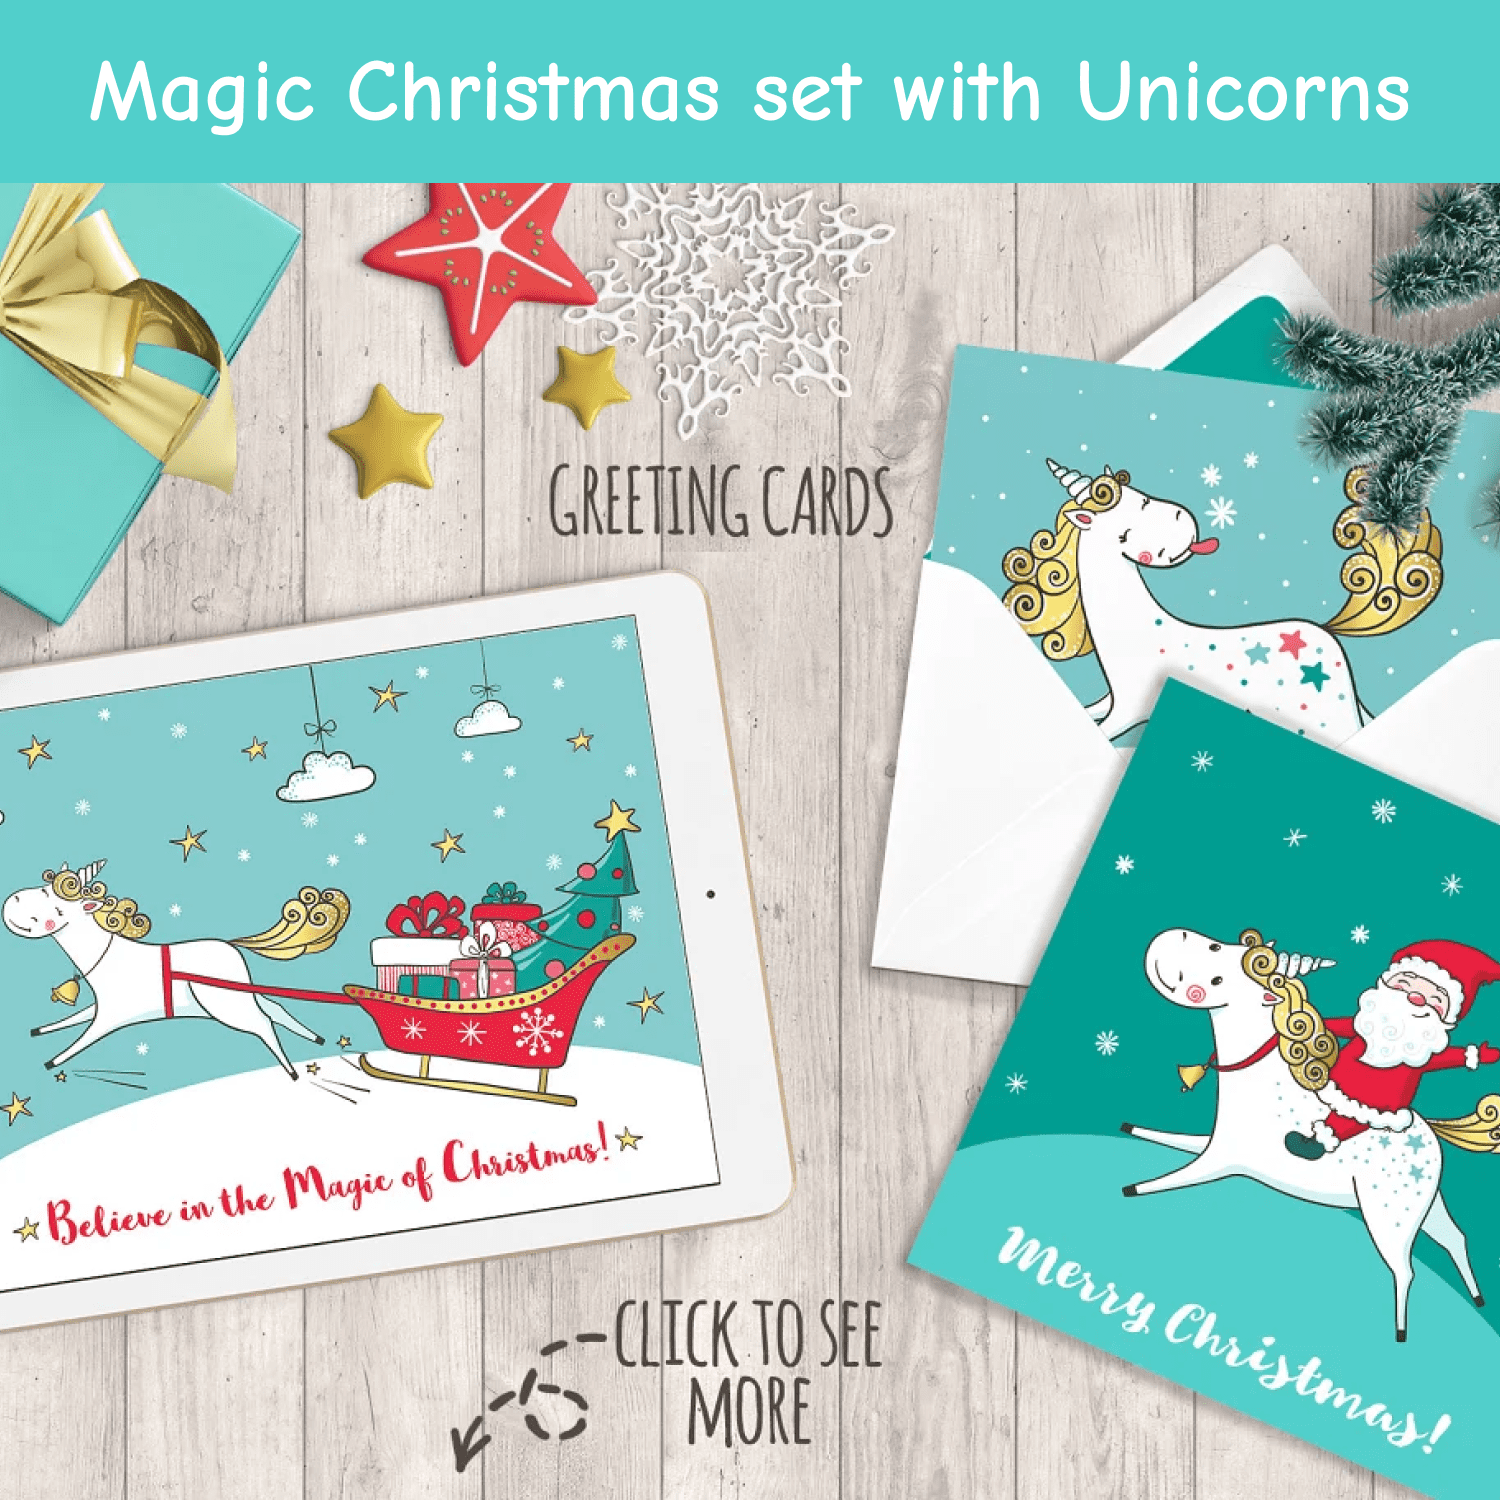 Magic Christmas set with Unicorns.